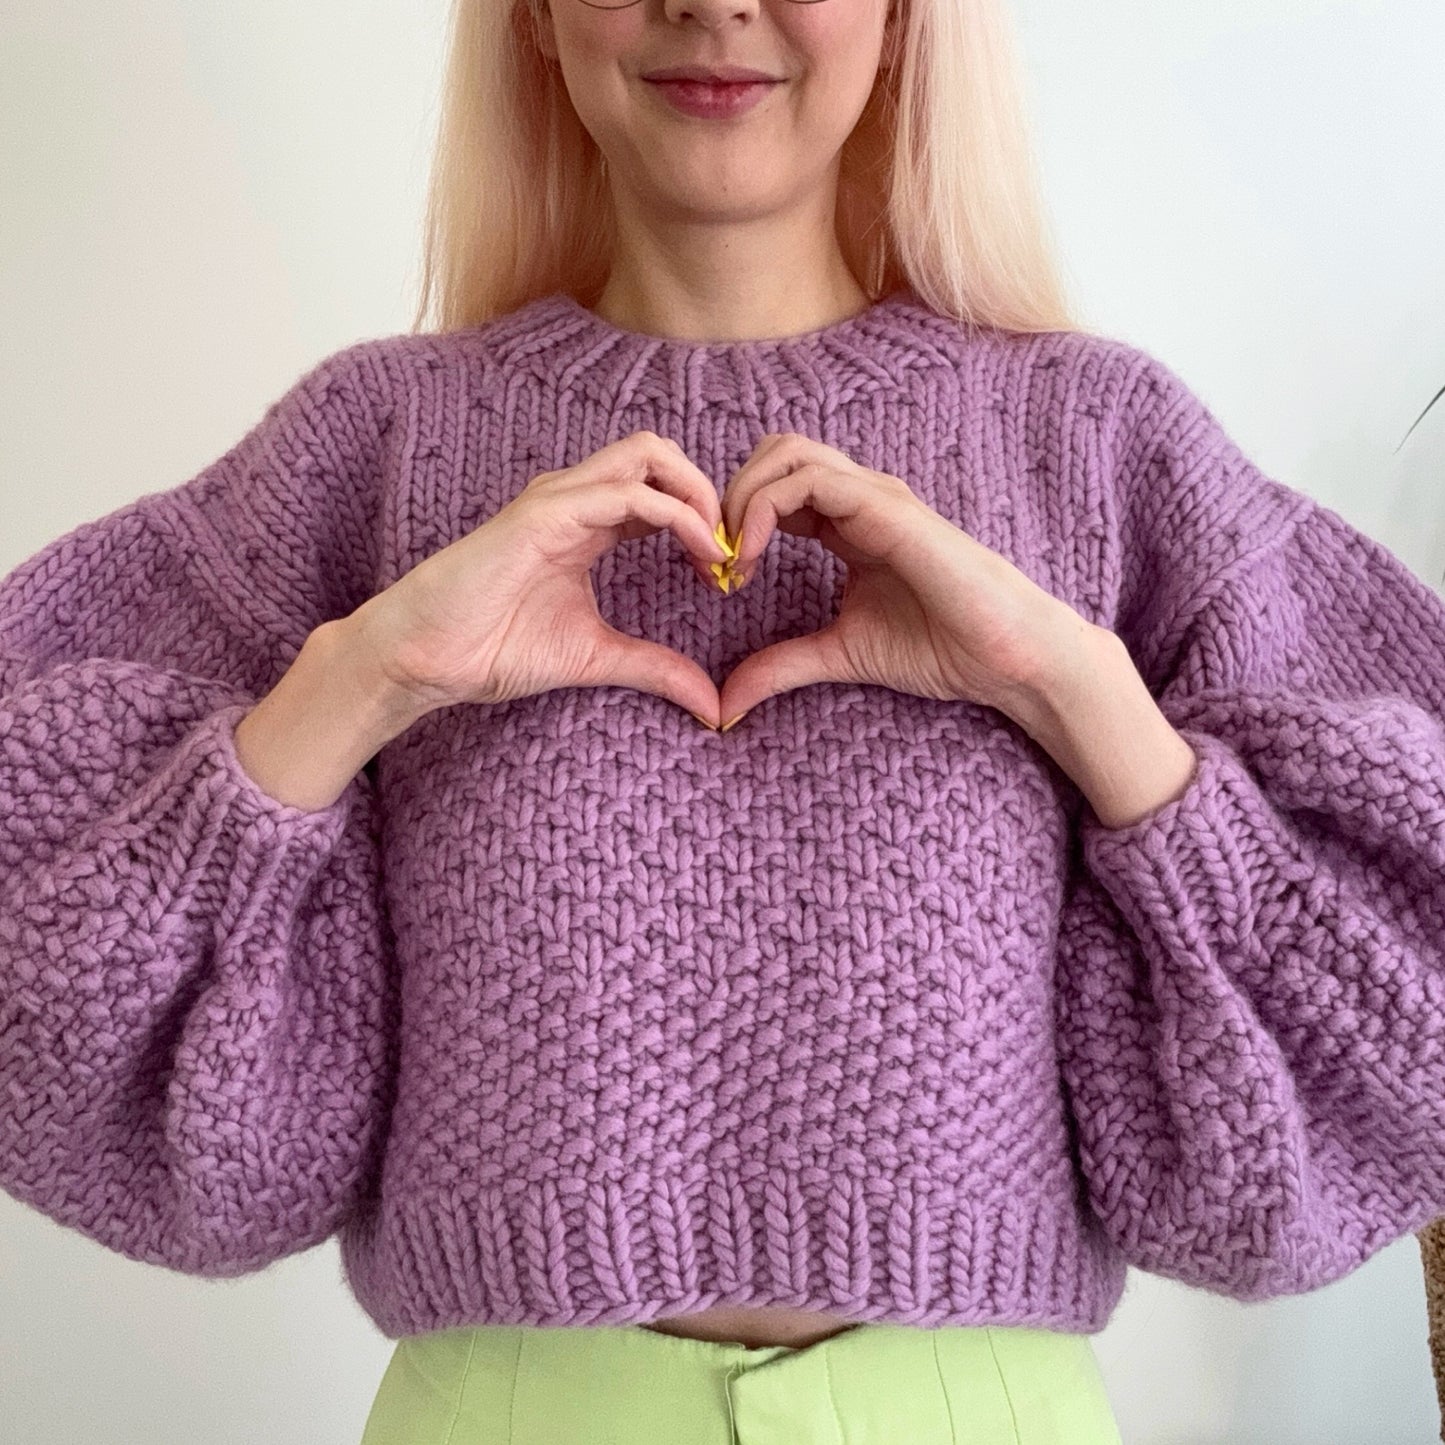 Bad Seed Sweater Digital Knitting Pattern